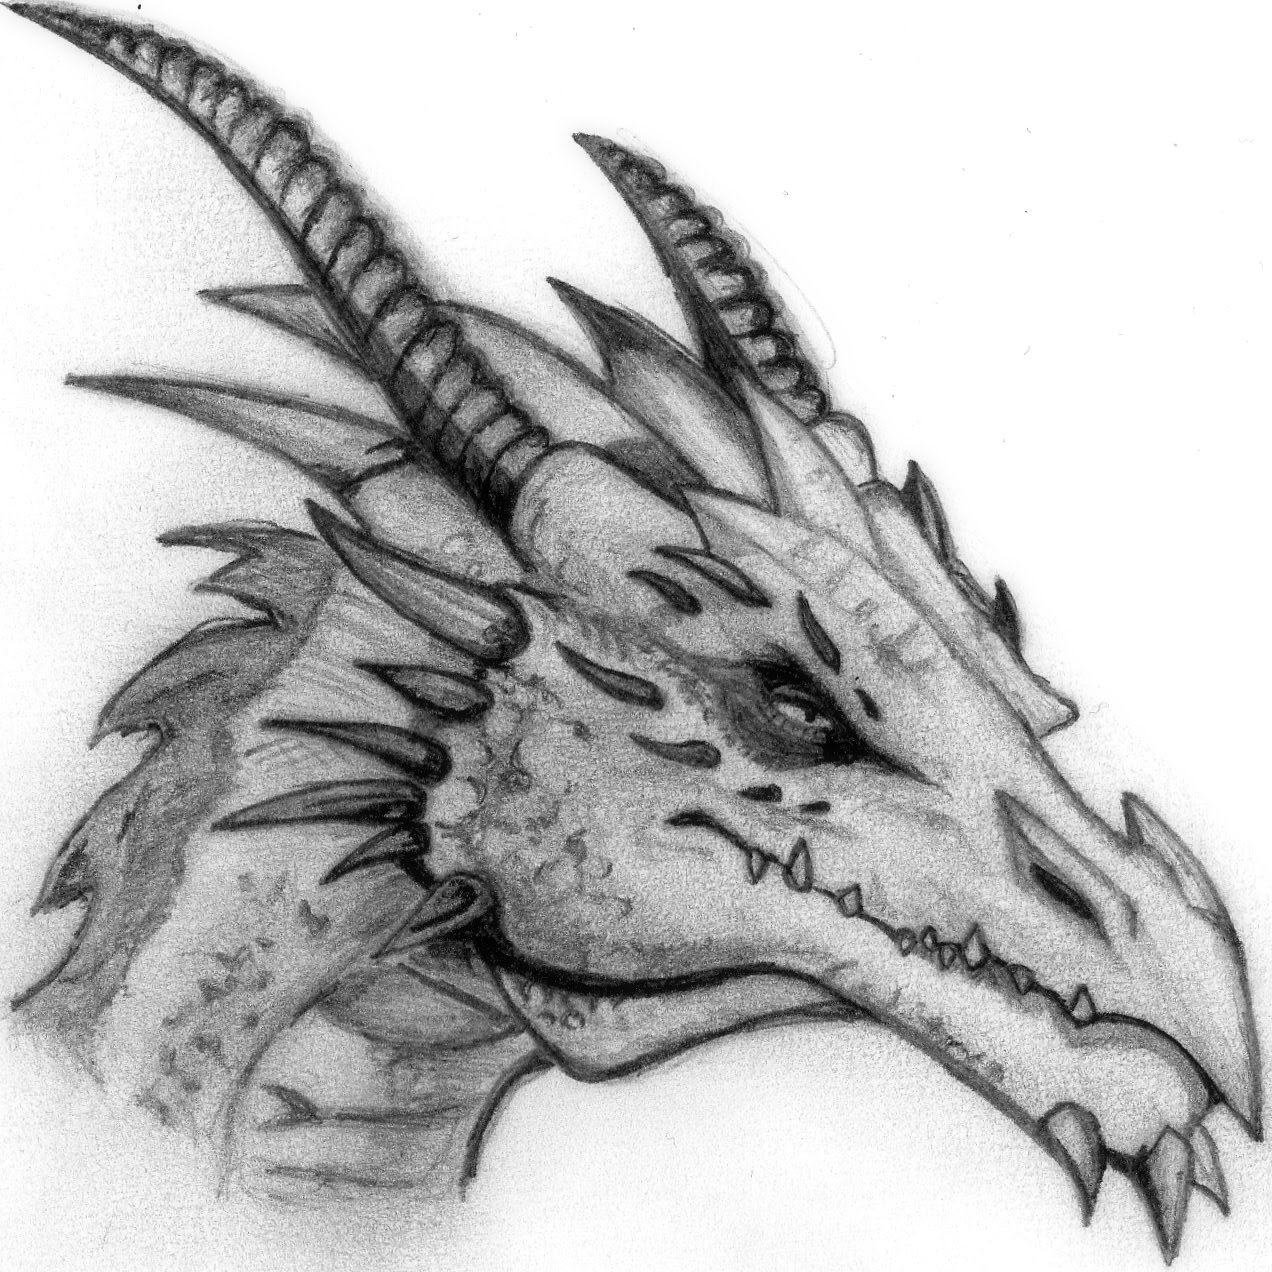 anime dragon sketch